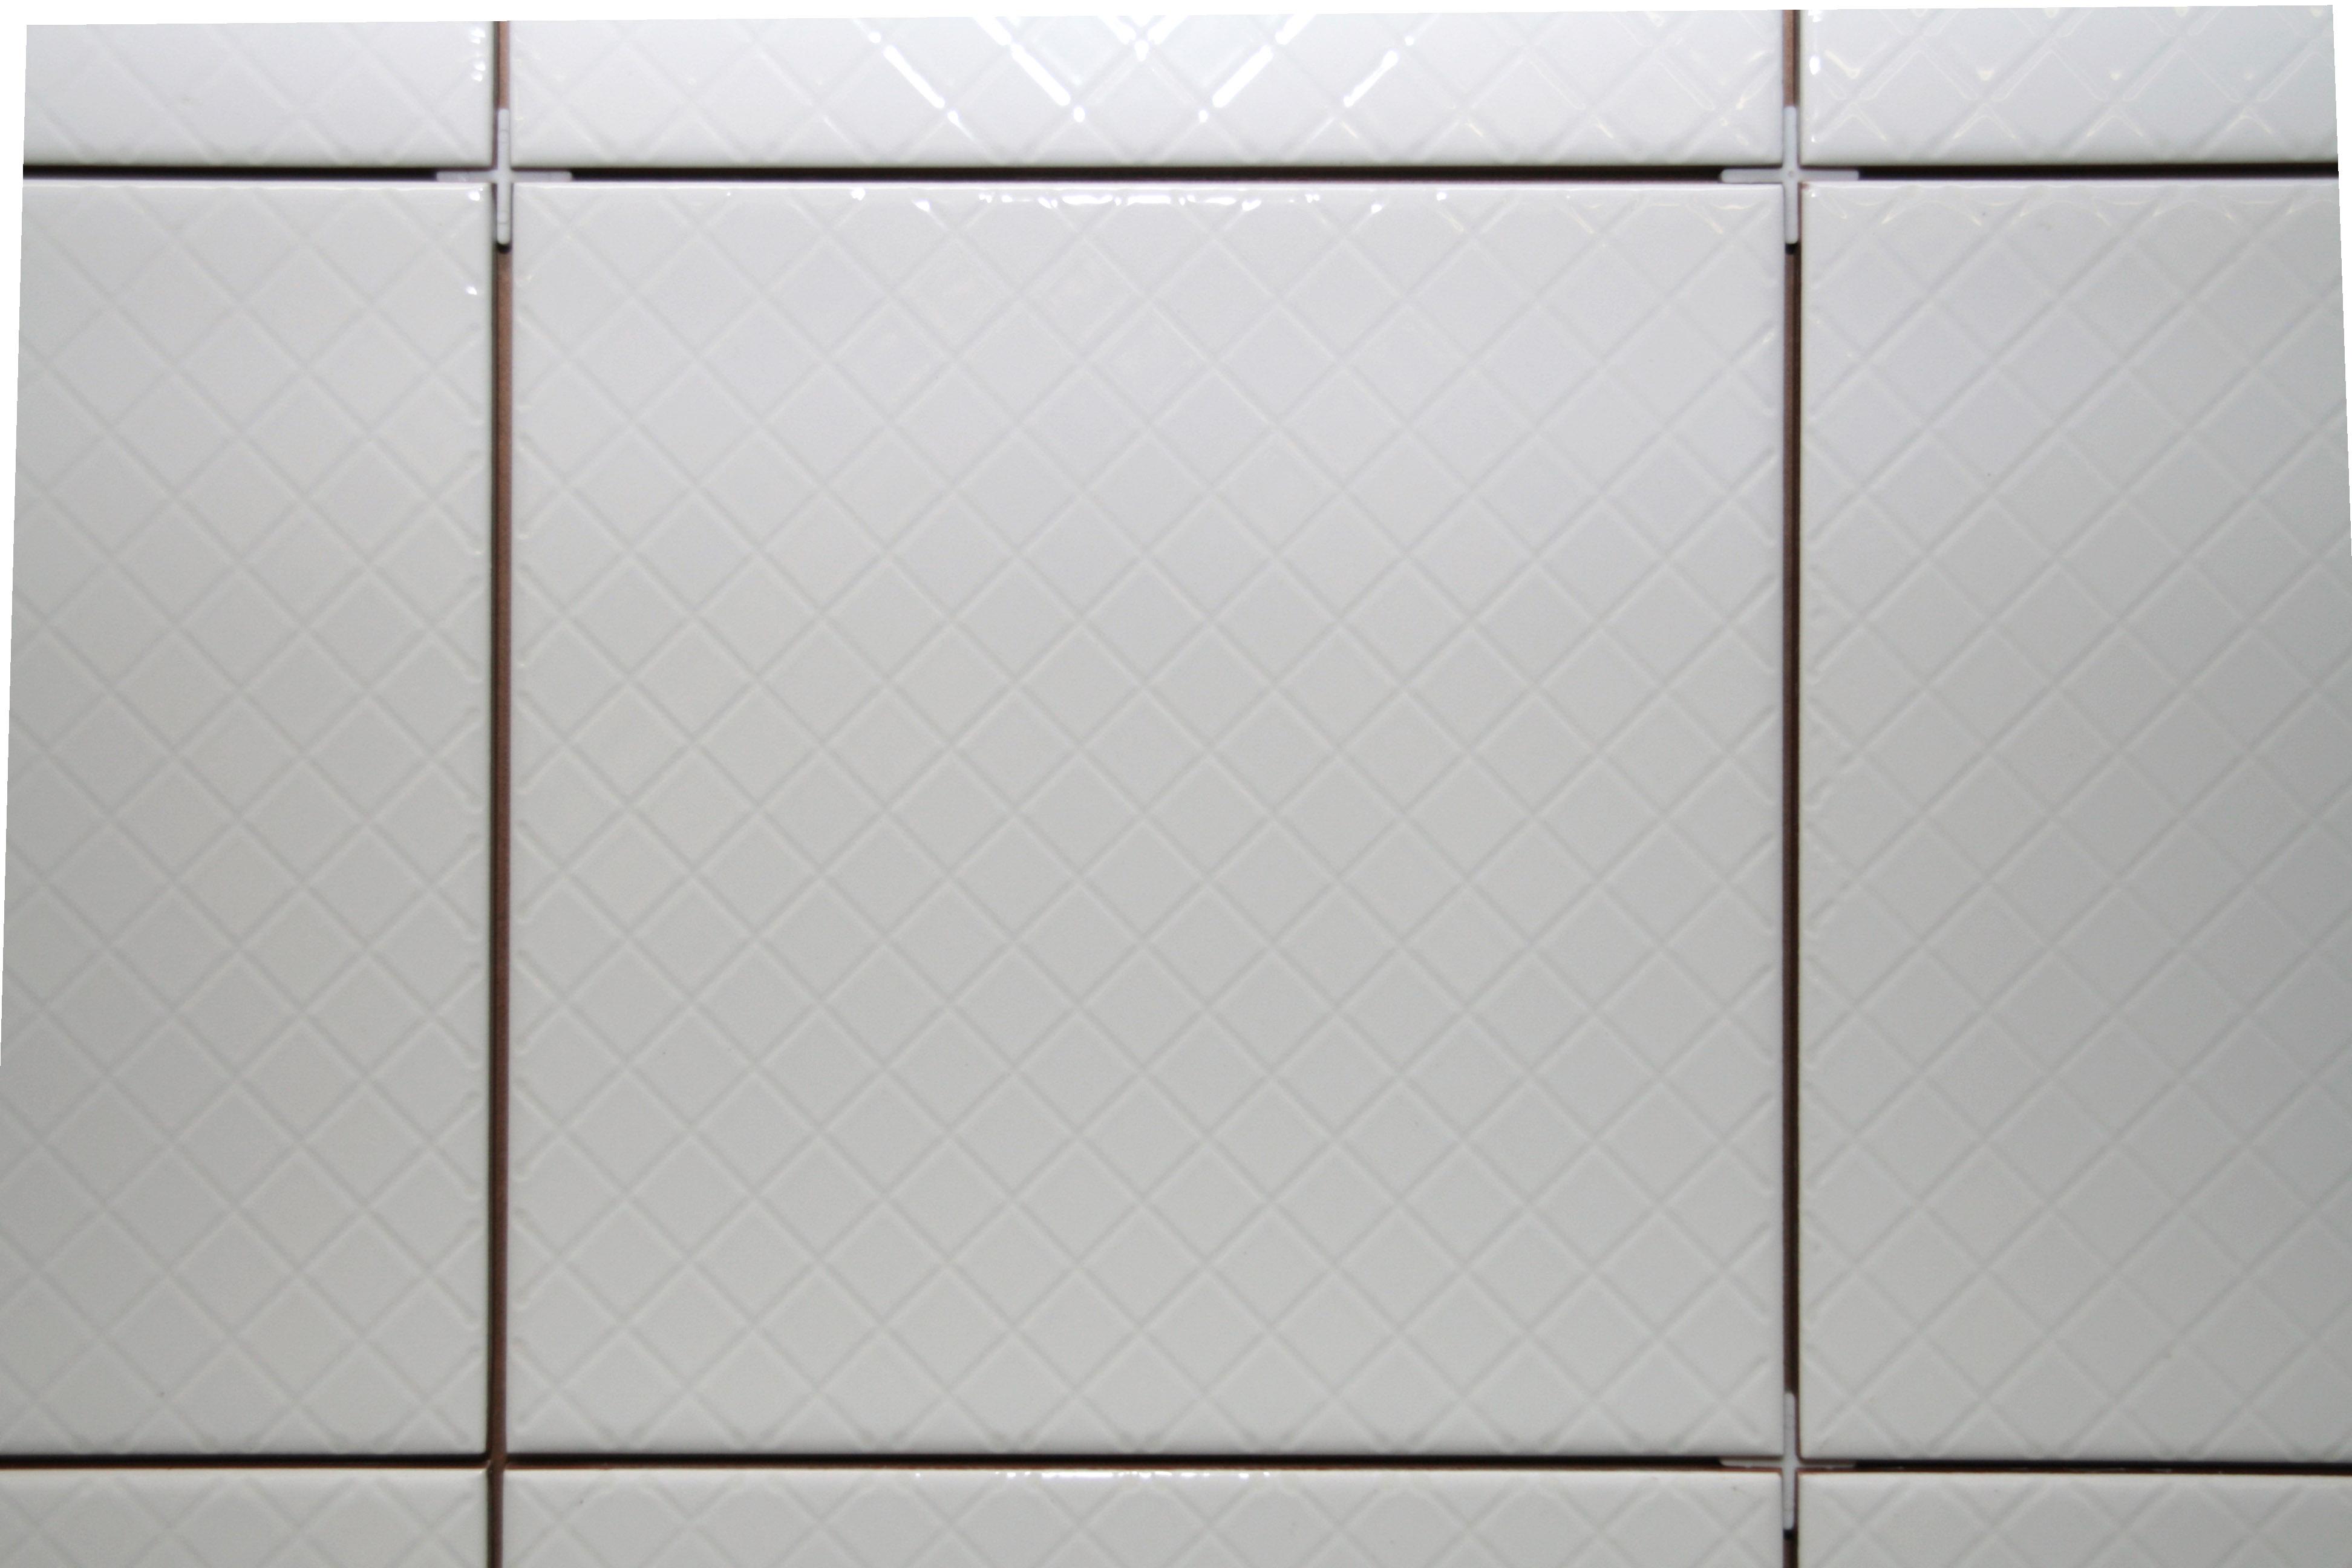 Brasilia Ceramic tile Branco Plain image darkened to show diamond texture